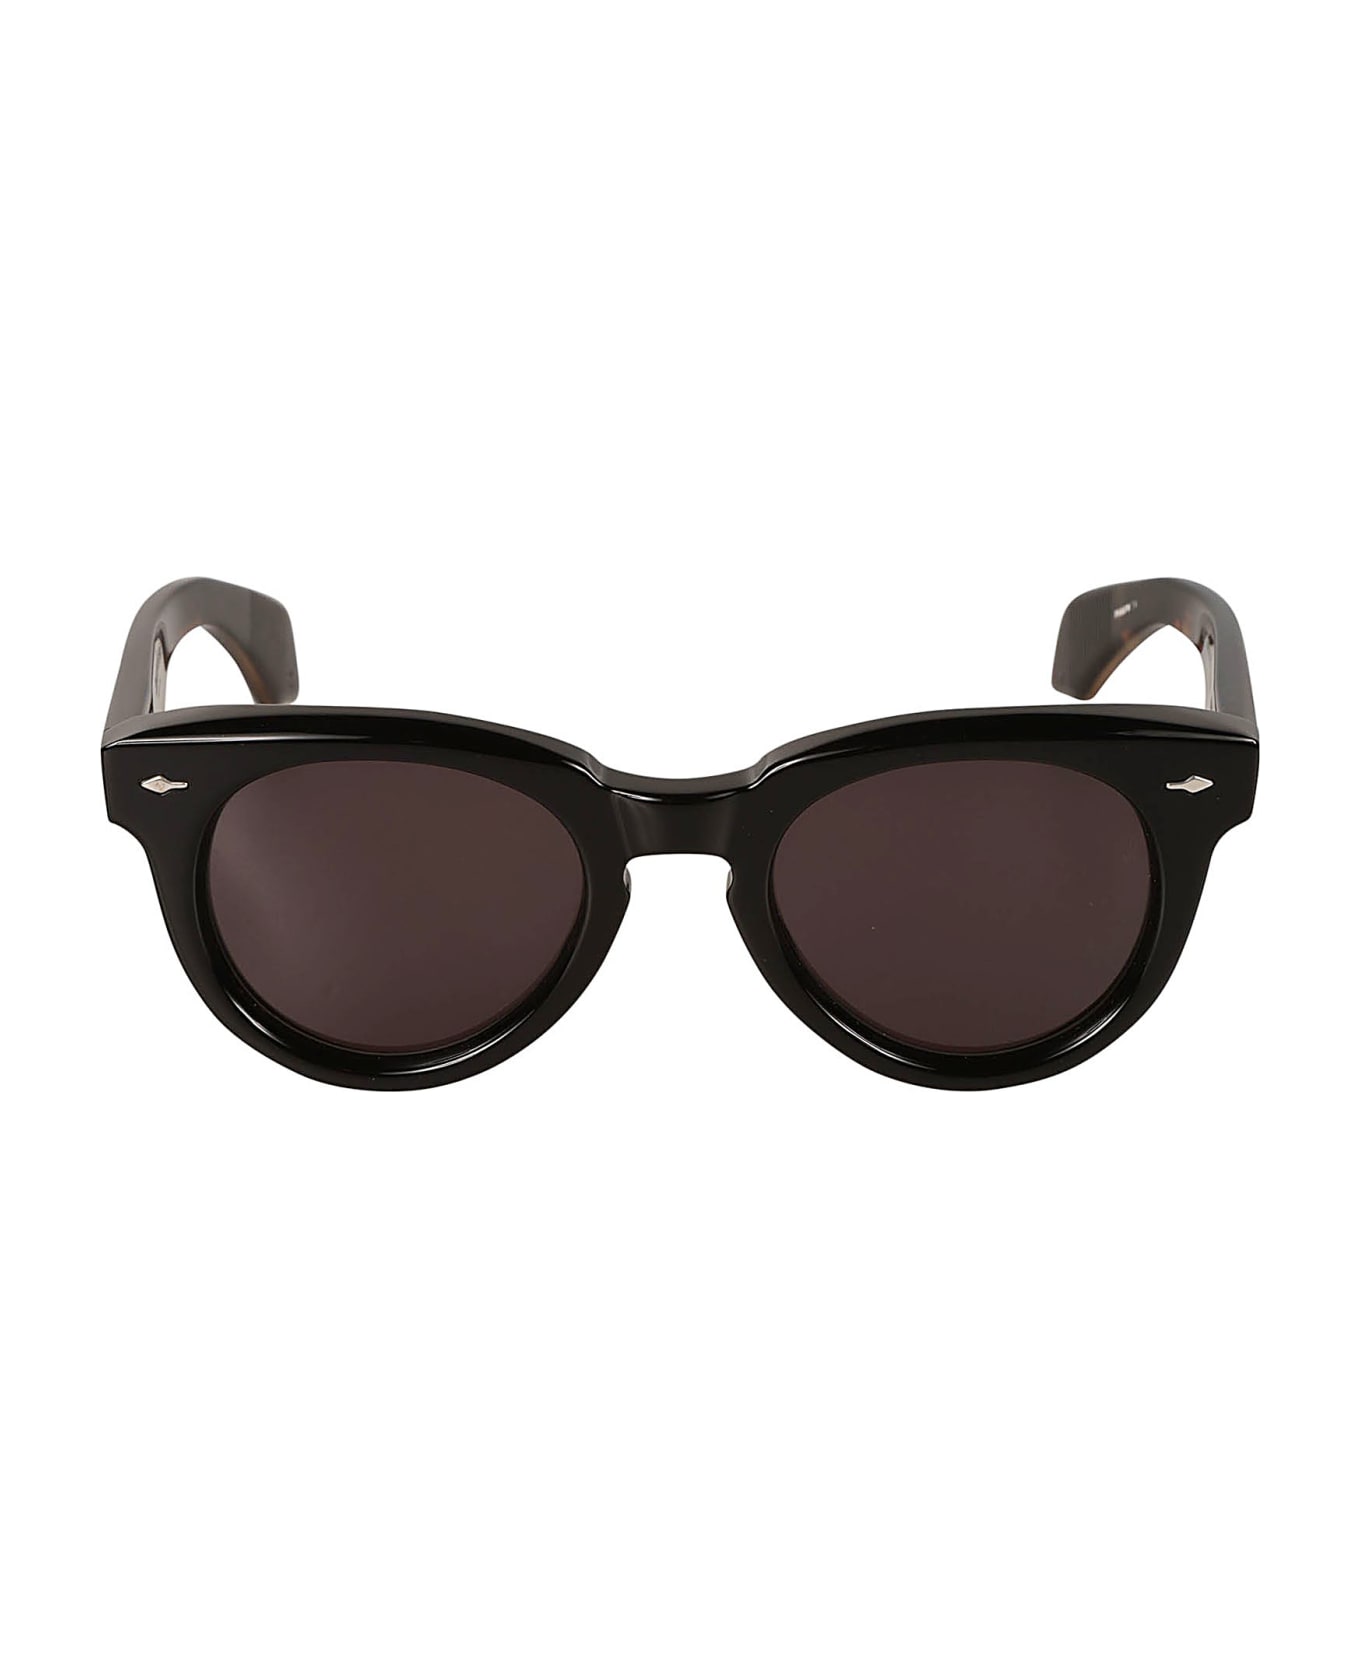 Jacques Marie Mage Fontaine Sunglasses Sunglasses - Black